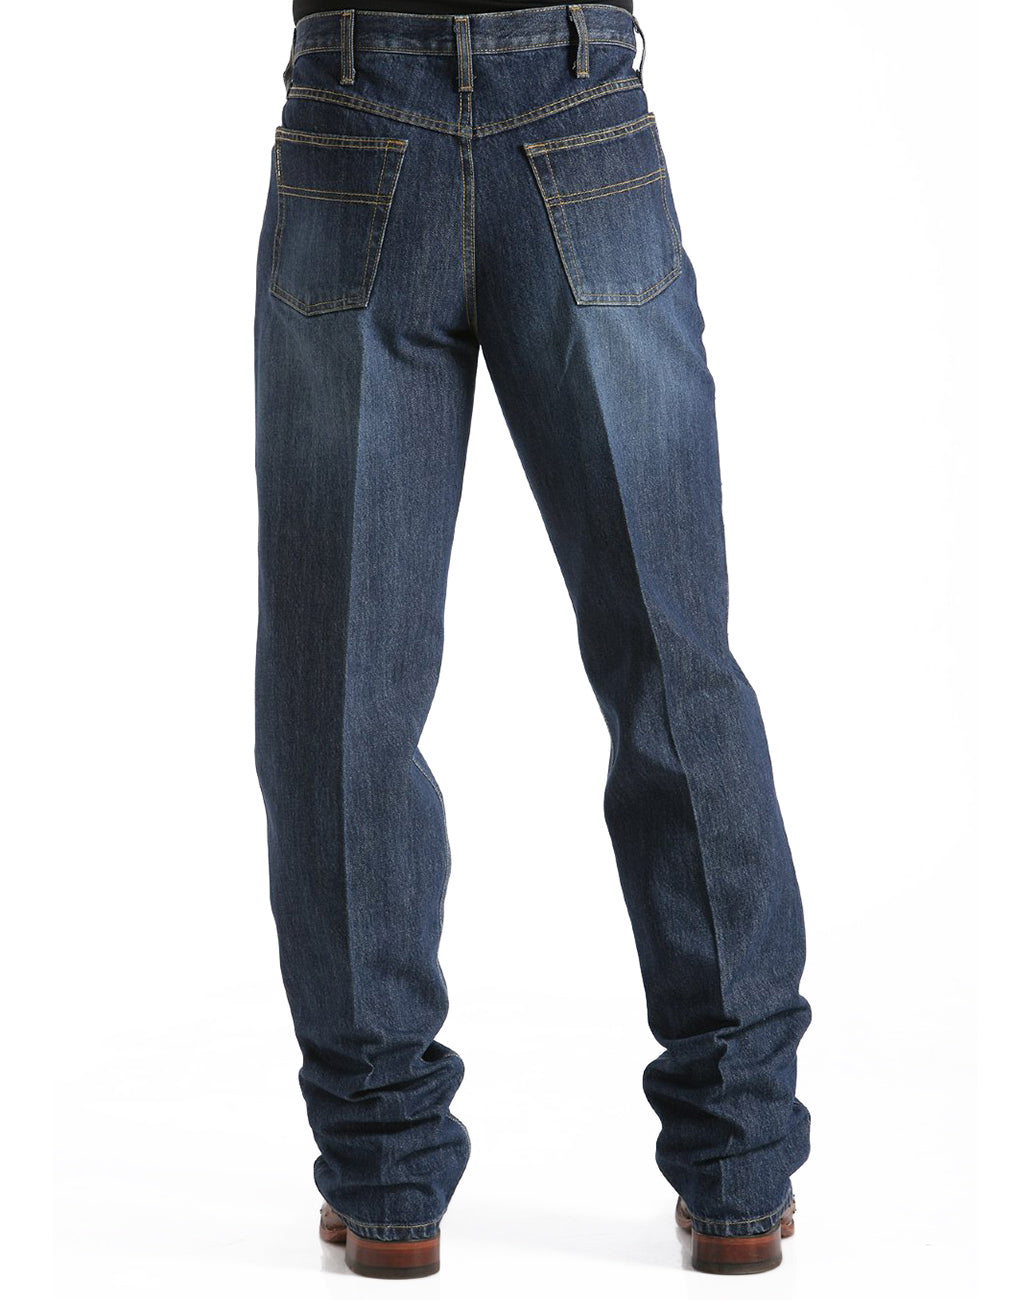 Men's Cinch Black Label Jeans